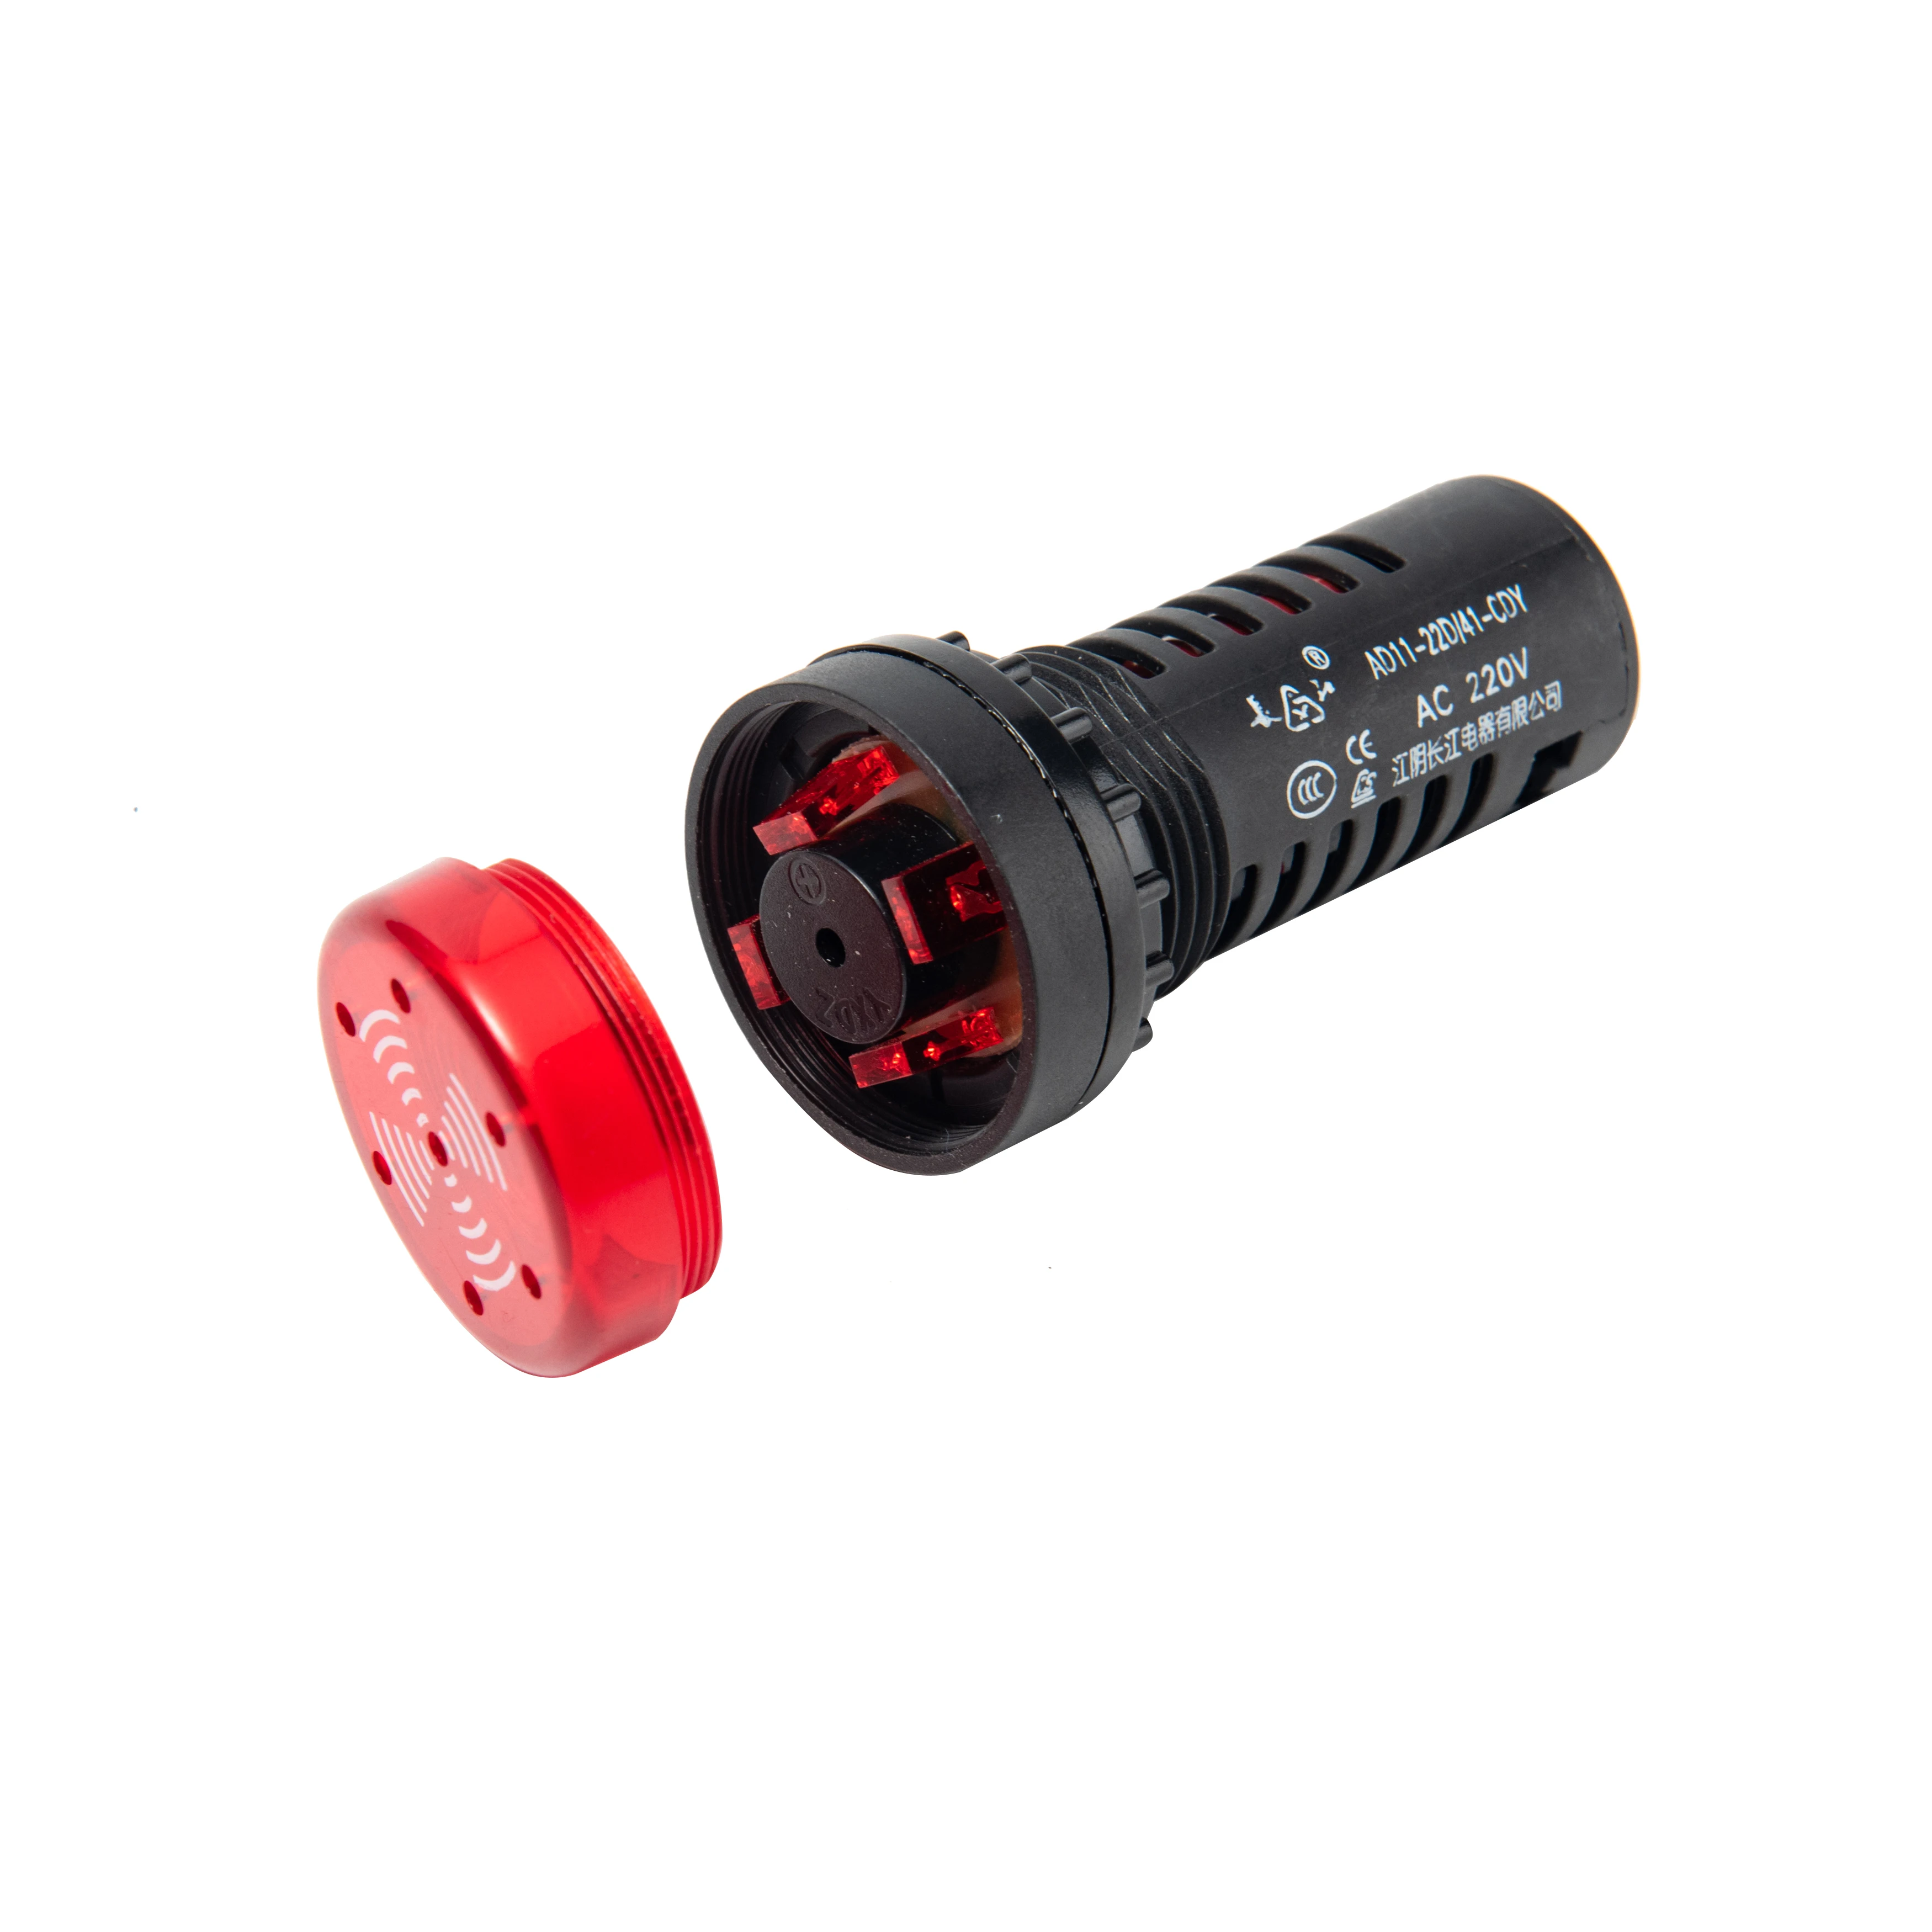 
AD11-22 series 22mm red 220V Indicator Light led flash buzzer 